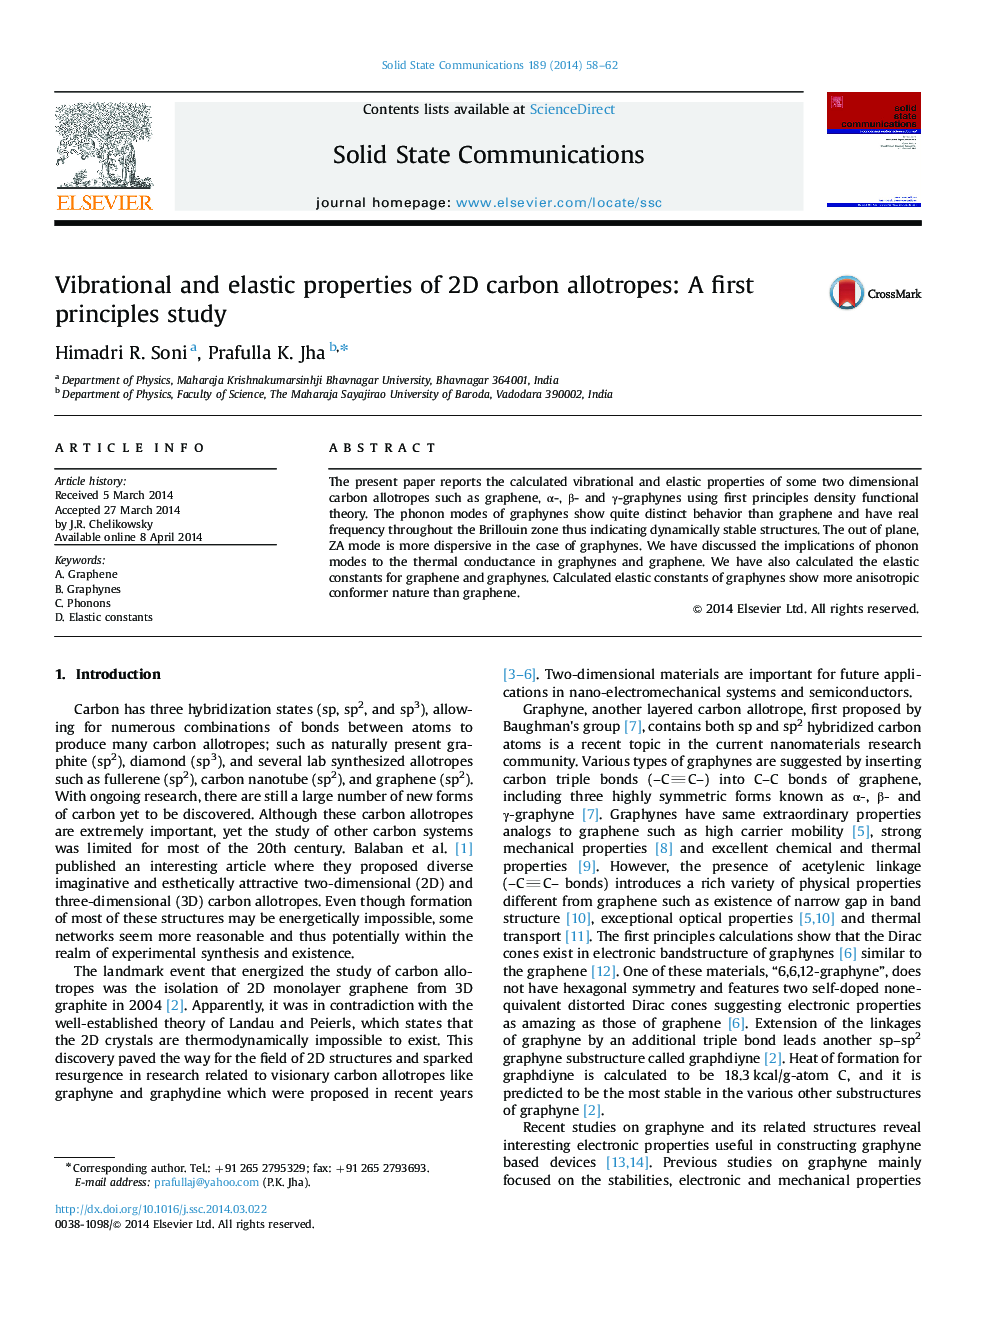 Vibrational and elastic properties of 2D carbon allotropes: A first principles study